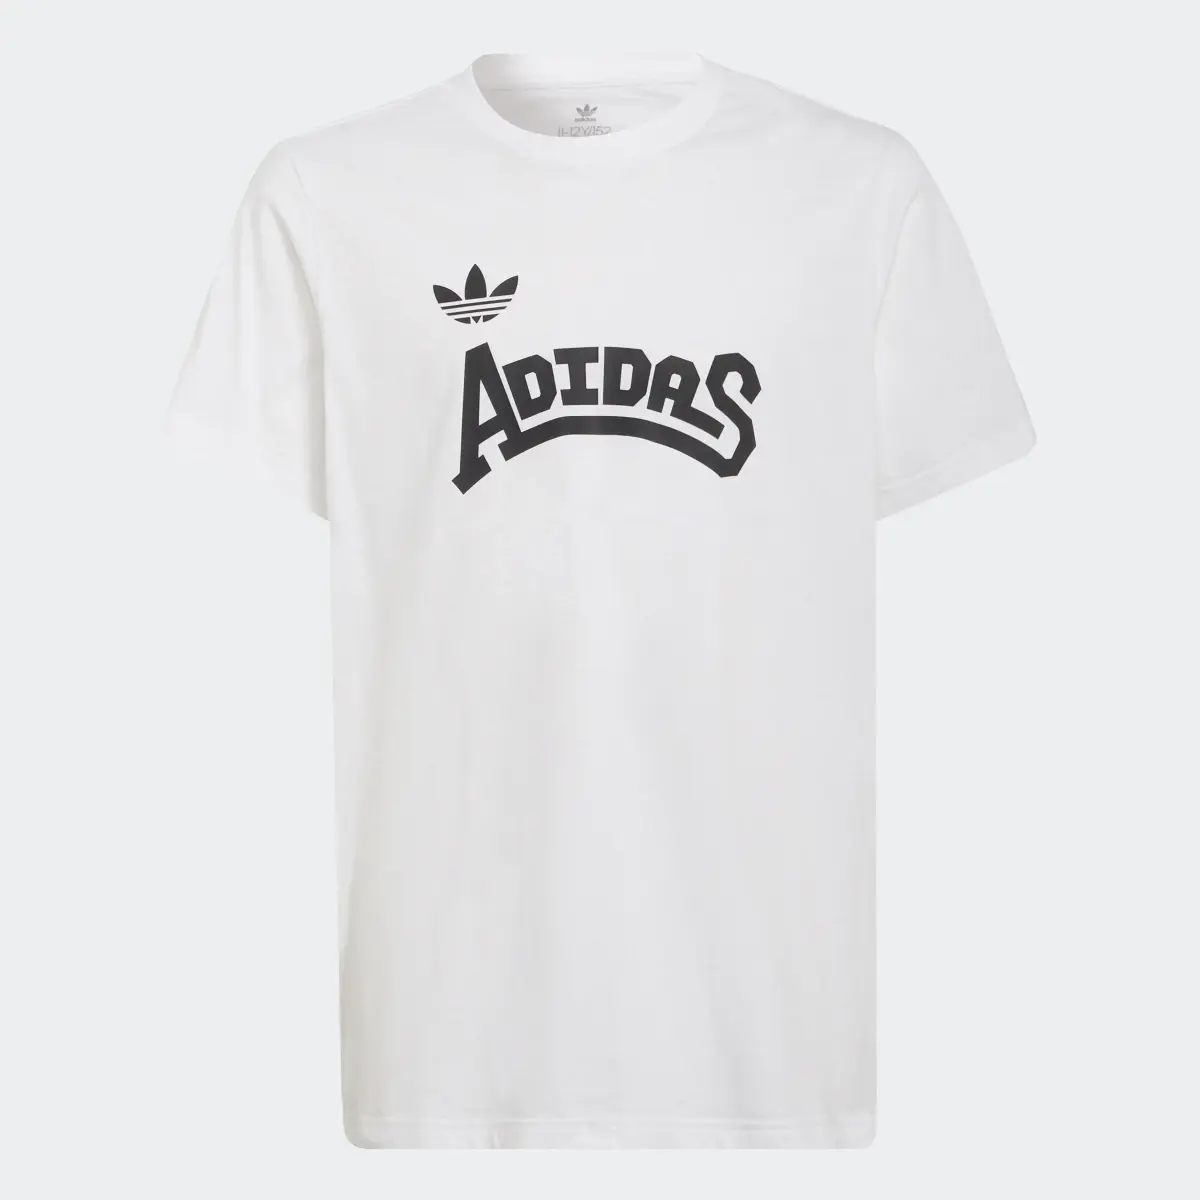 Adidas Graphic T-Shirt. 1